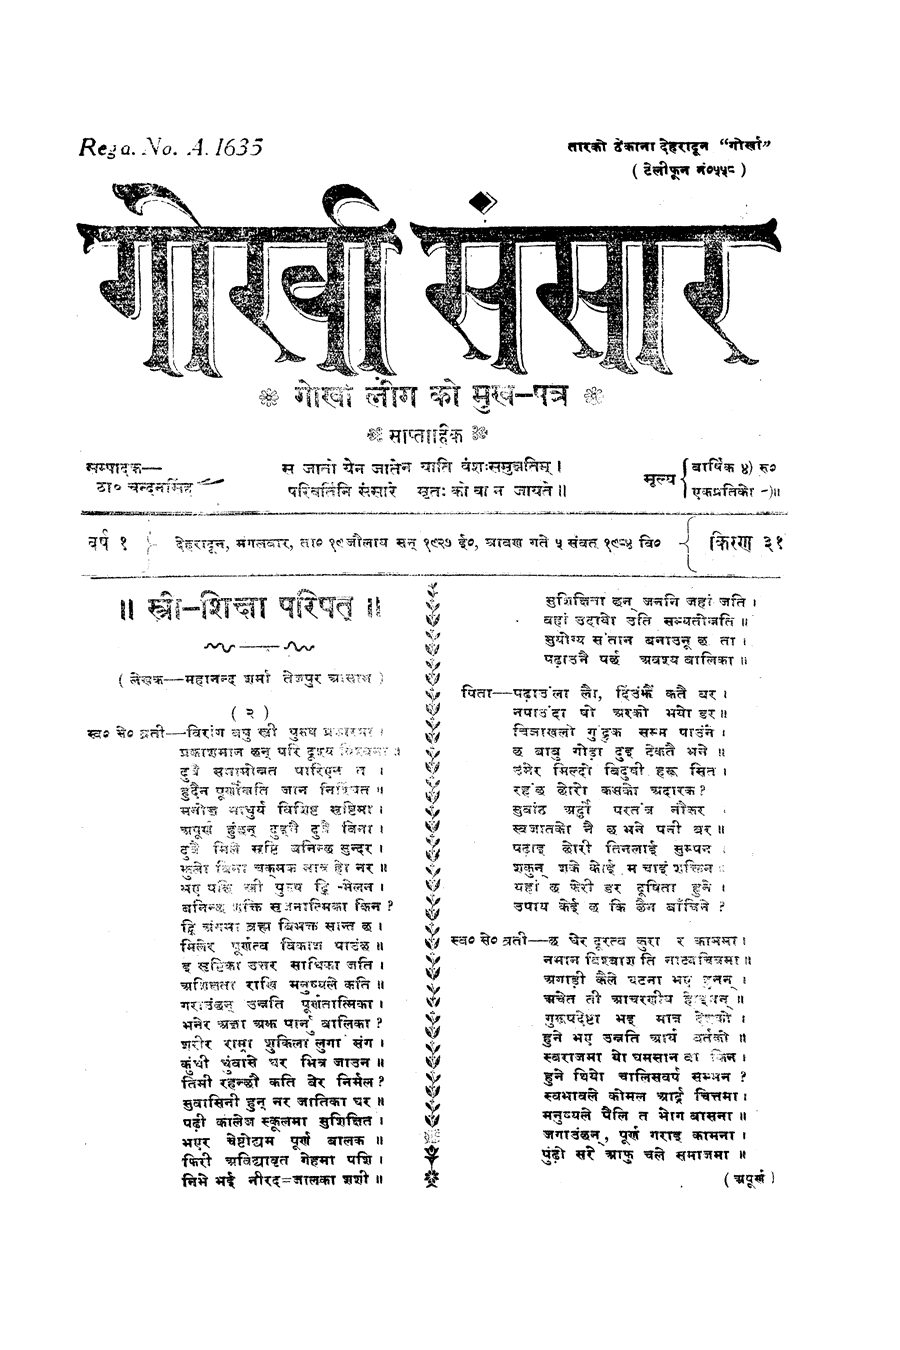 Gorkha Sansar, 19 July 1927, page 1